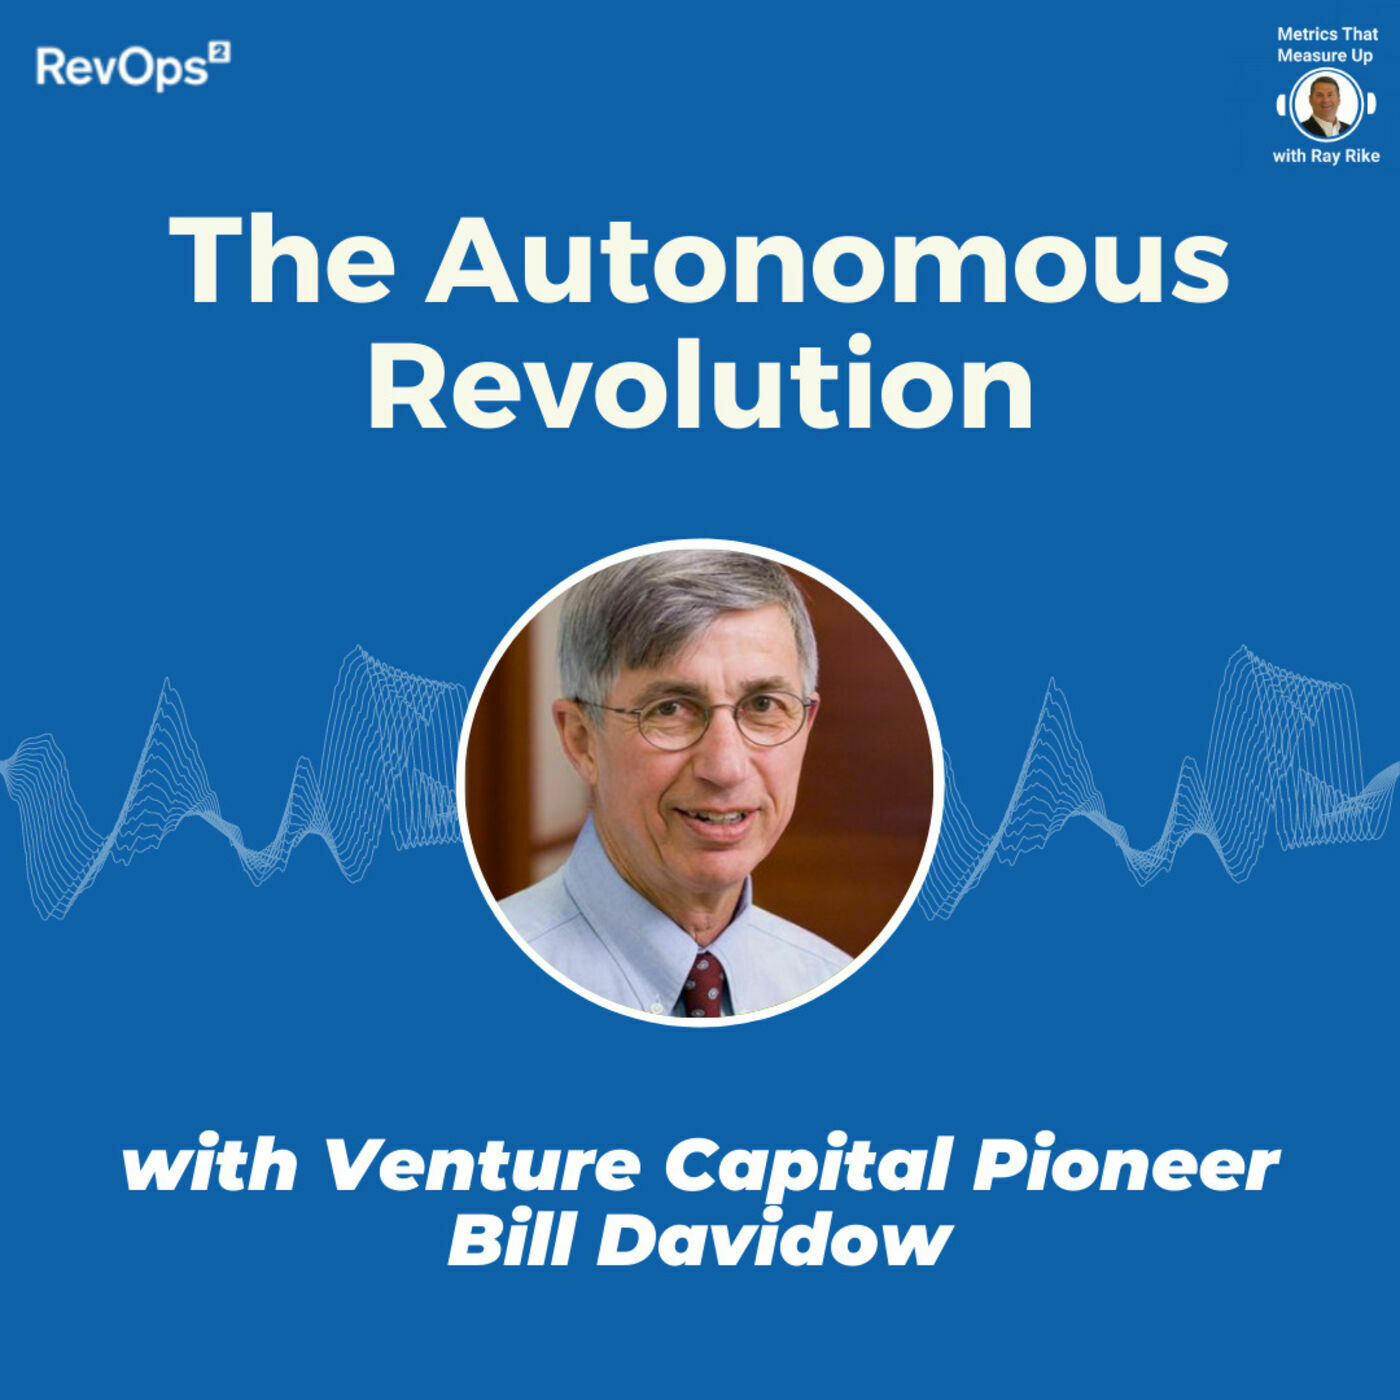 The Autonomous Revolution - with Bill Davidow